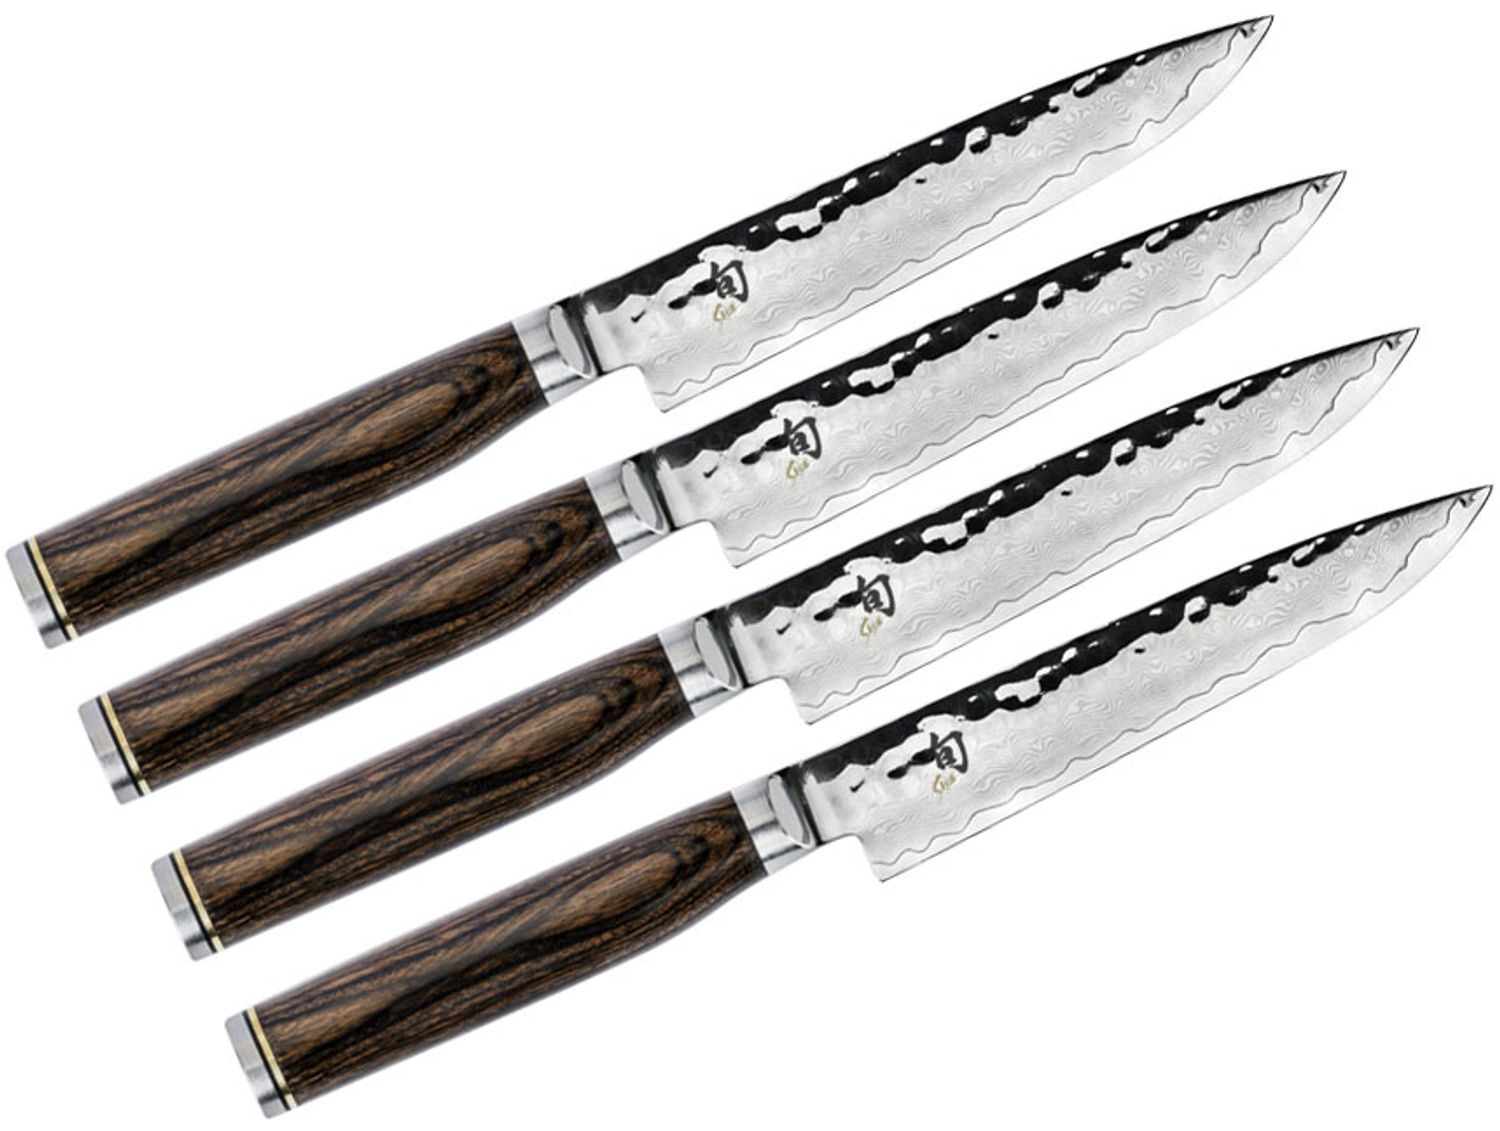 Global SAI-T04 Sai Jumble Steak Knife 4.5 Hammered Blade - KnifeCenter